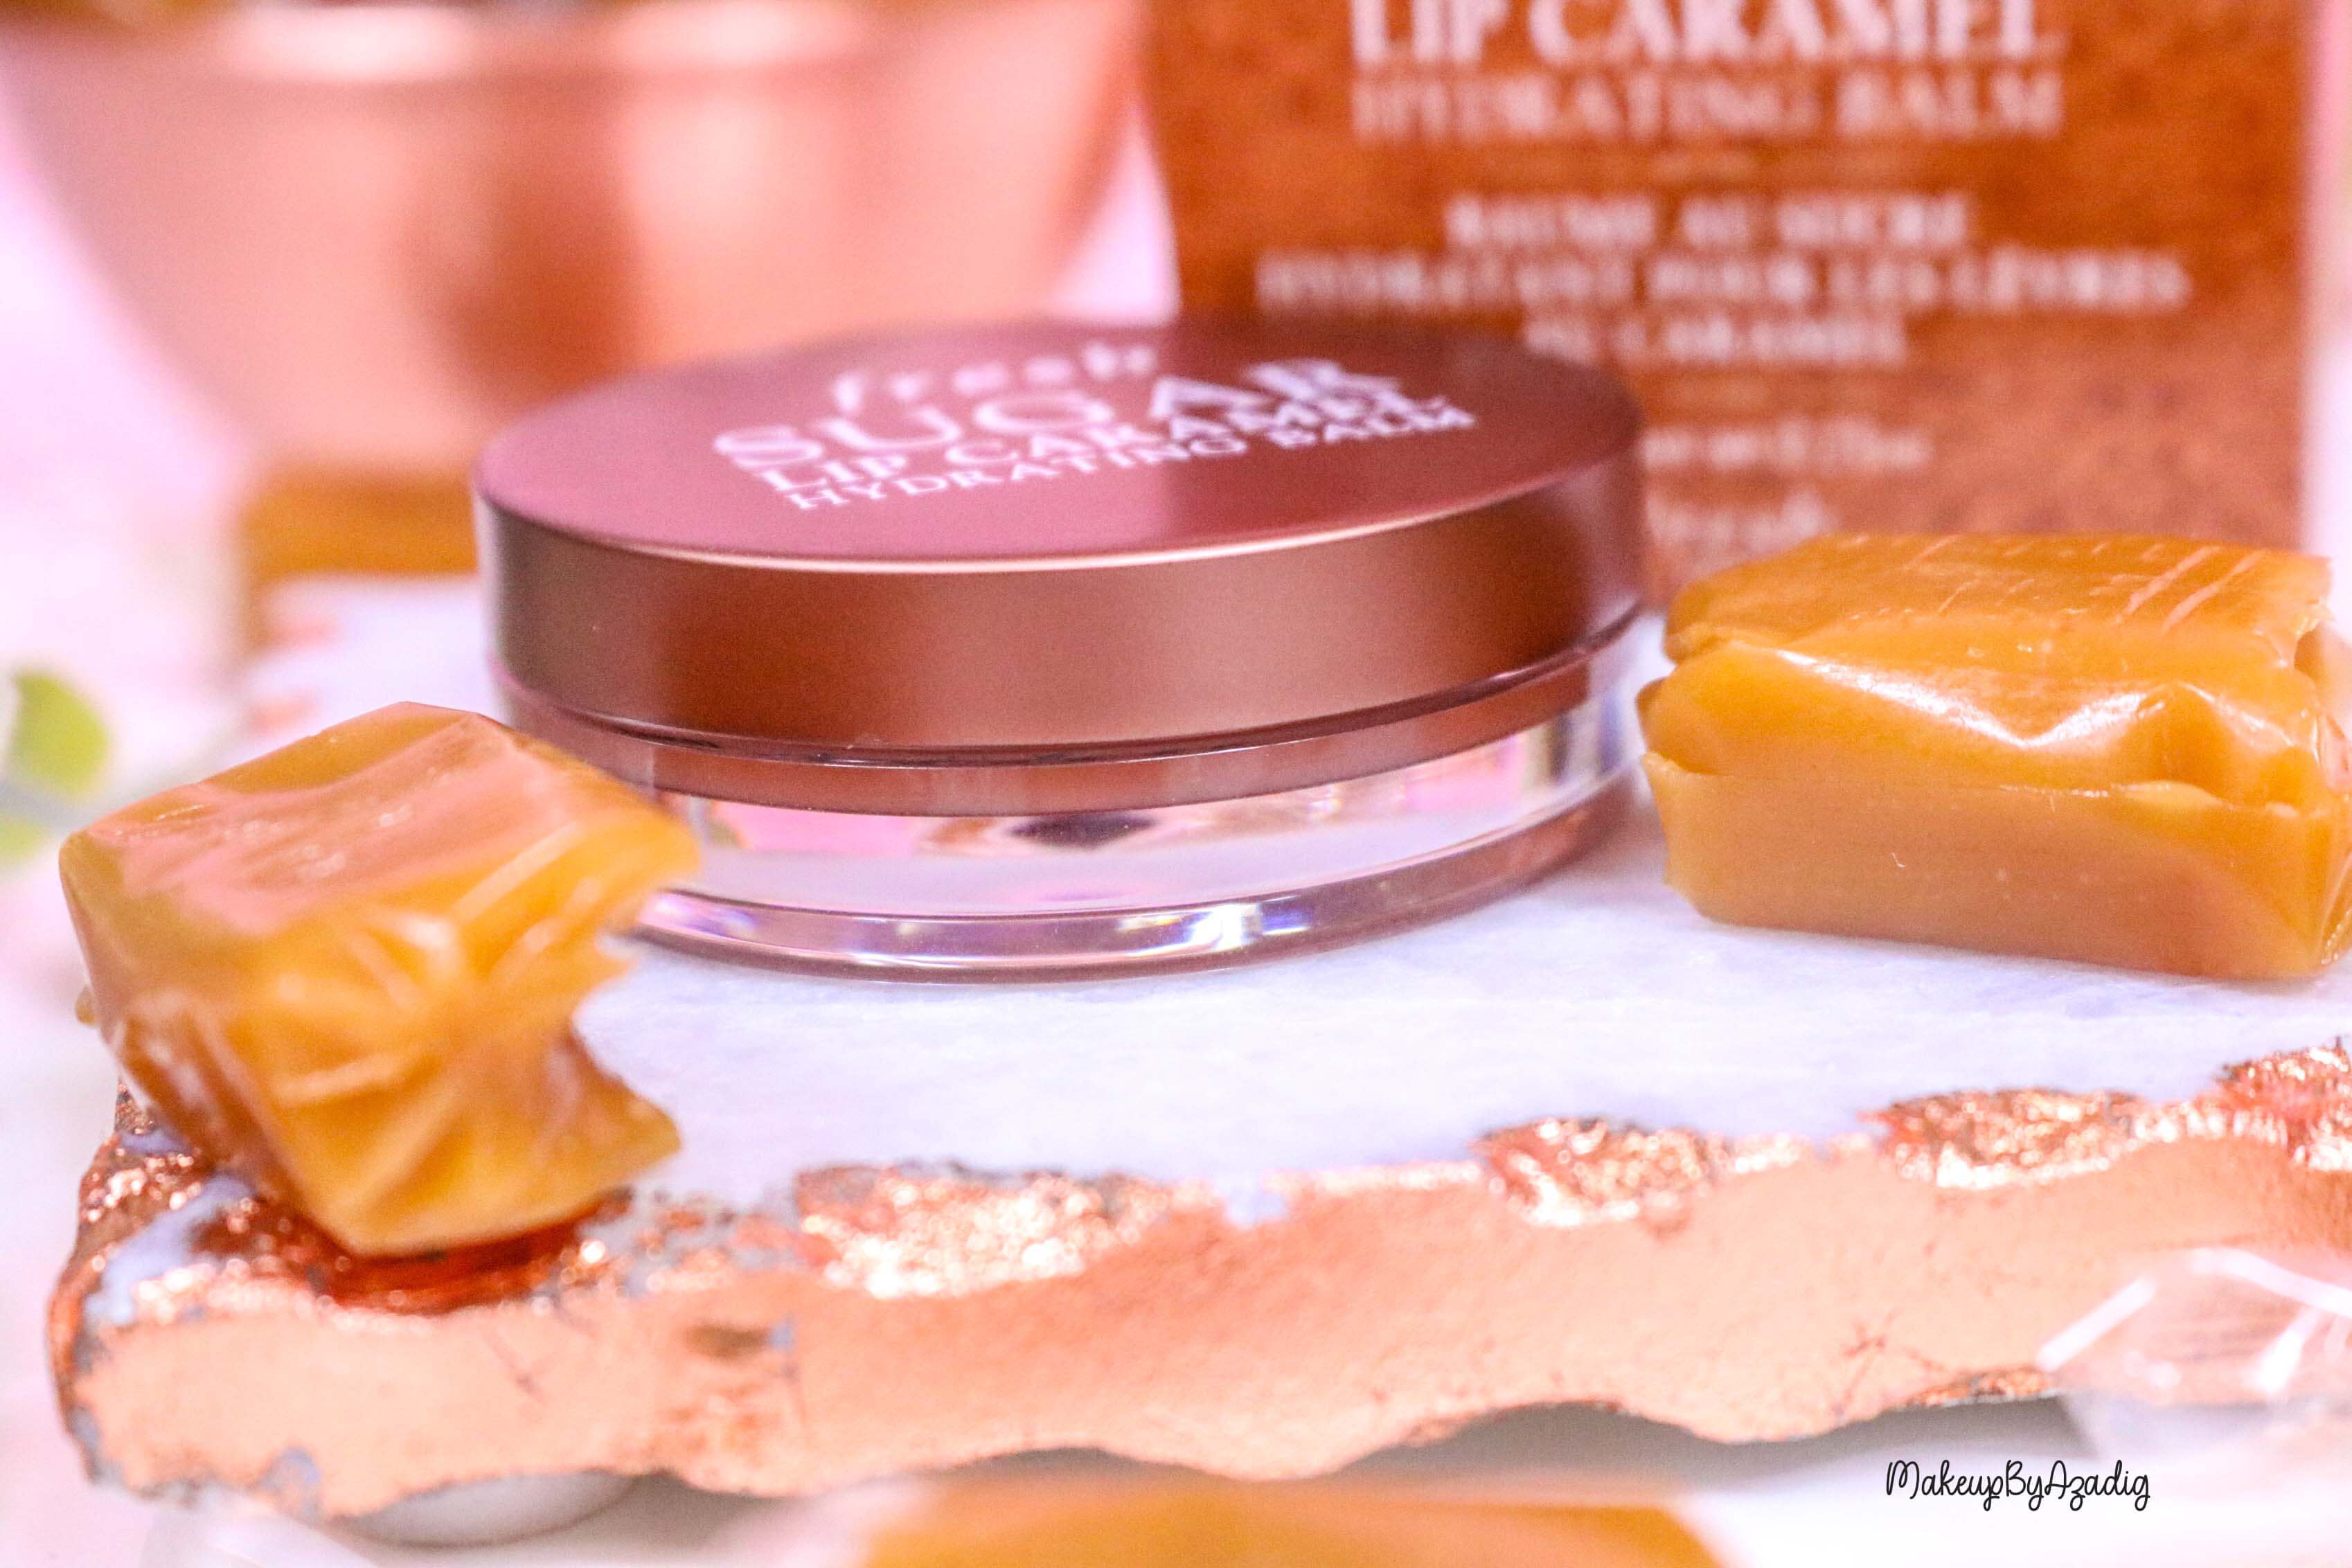 revue-baume-sucre-fresh-beauty-skincare-caramel-sugar-lip-caramel-sephora-makeupbyazadig-avis-prix-balm-boite